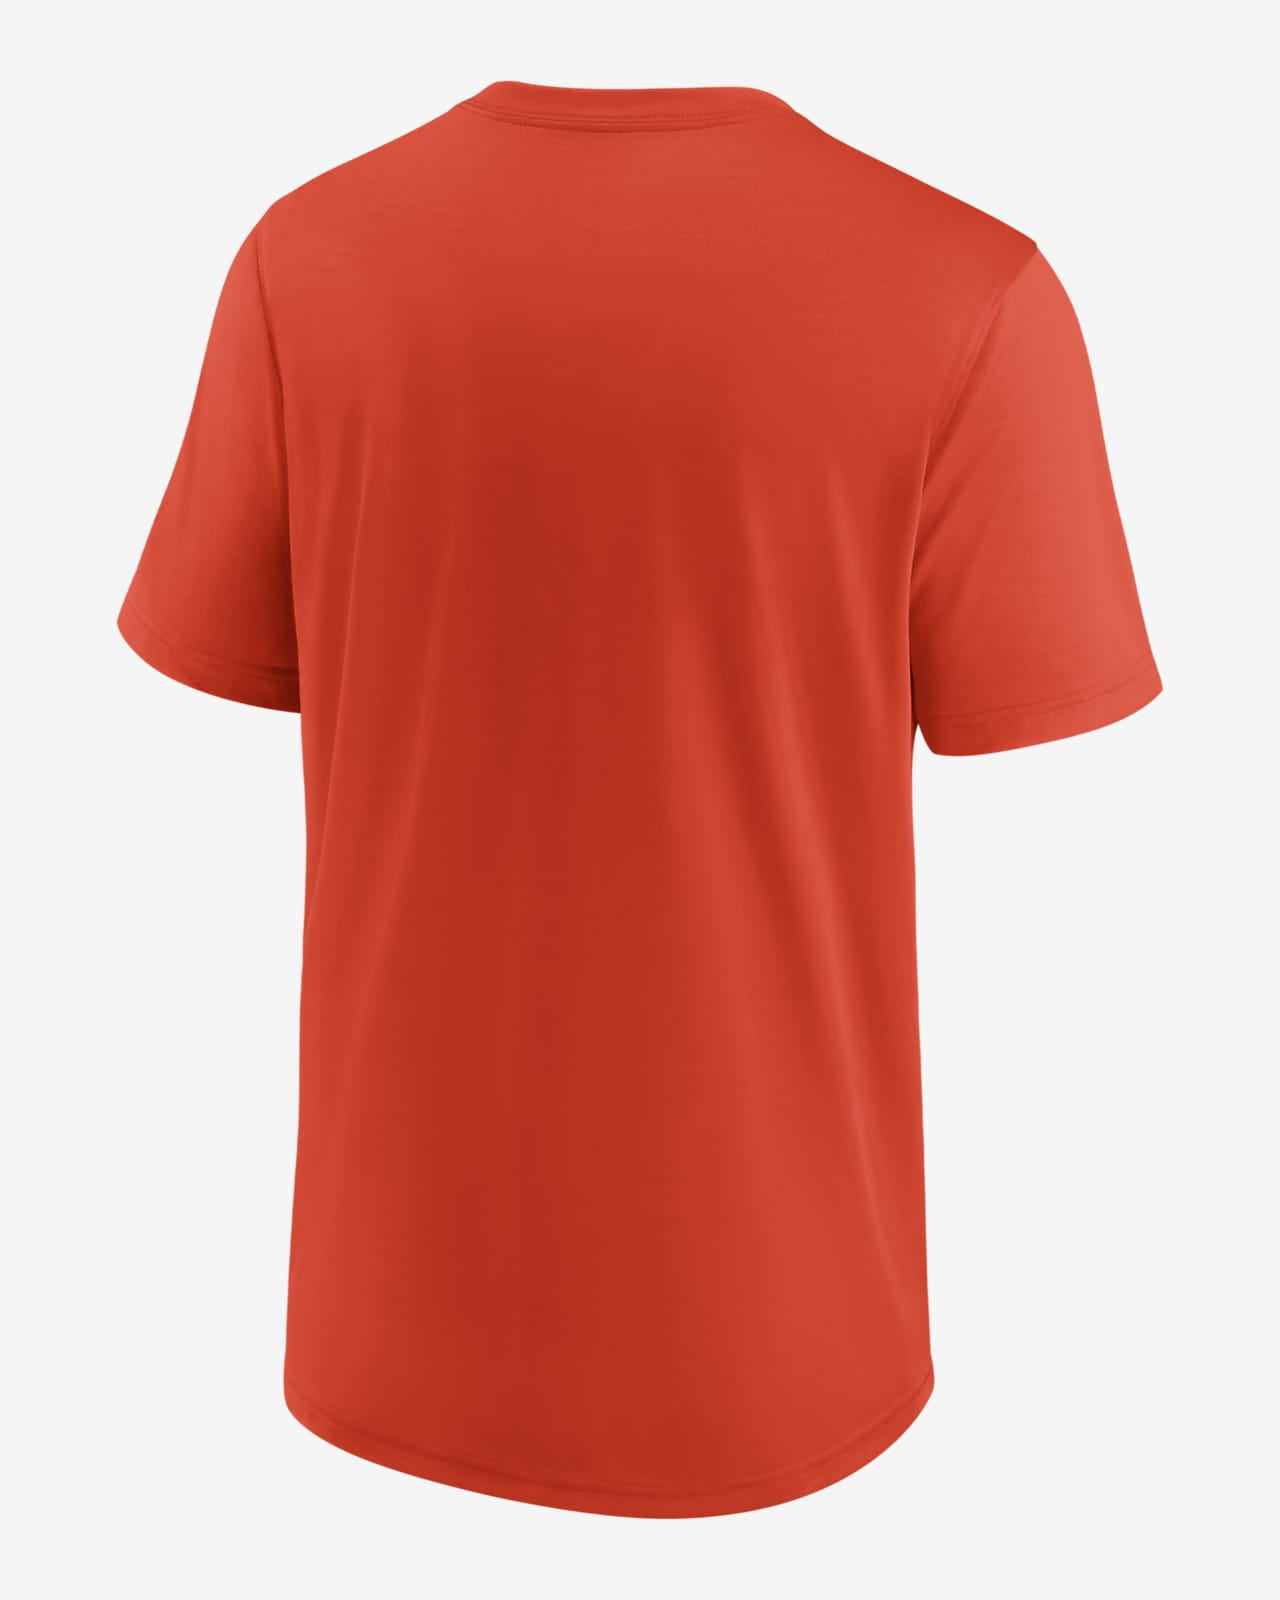 New Medium Nike Houston Astros Polo Golf Collared Shirt Sunset